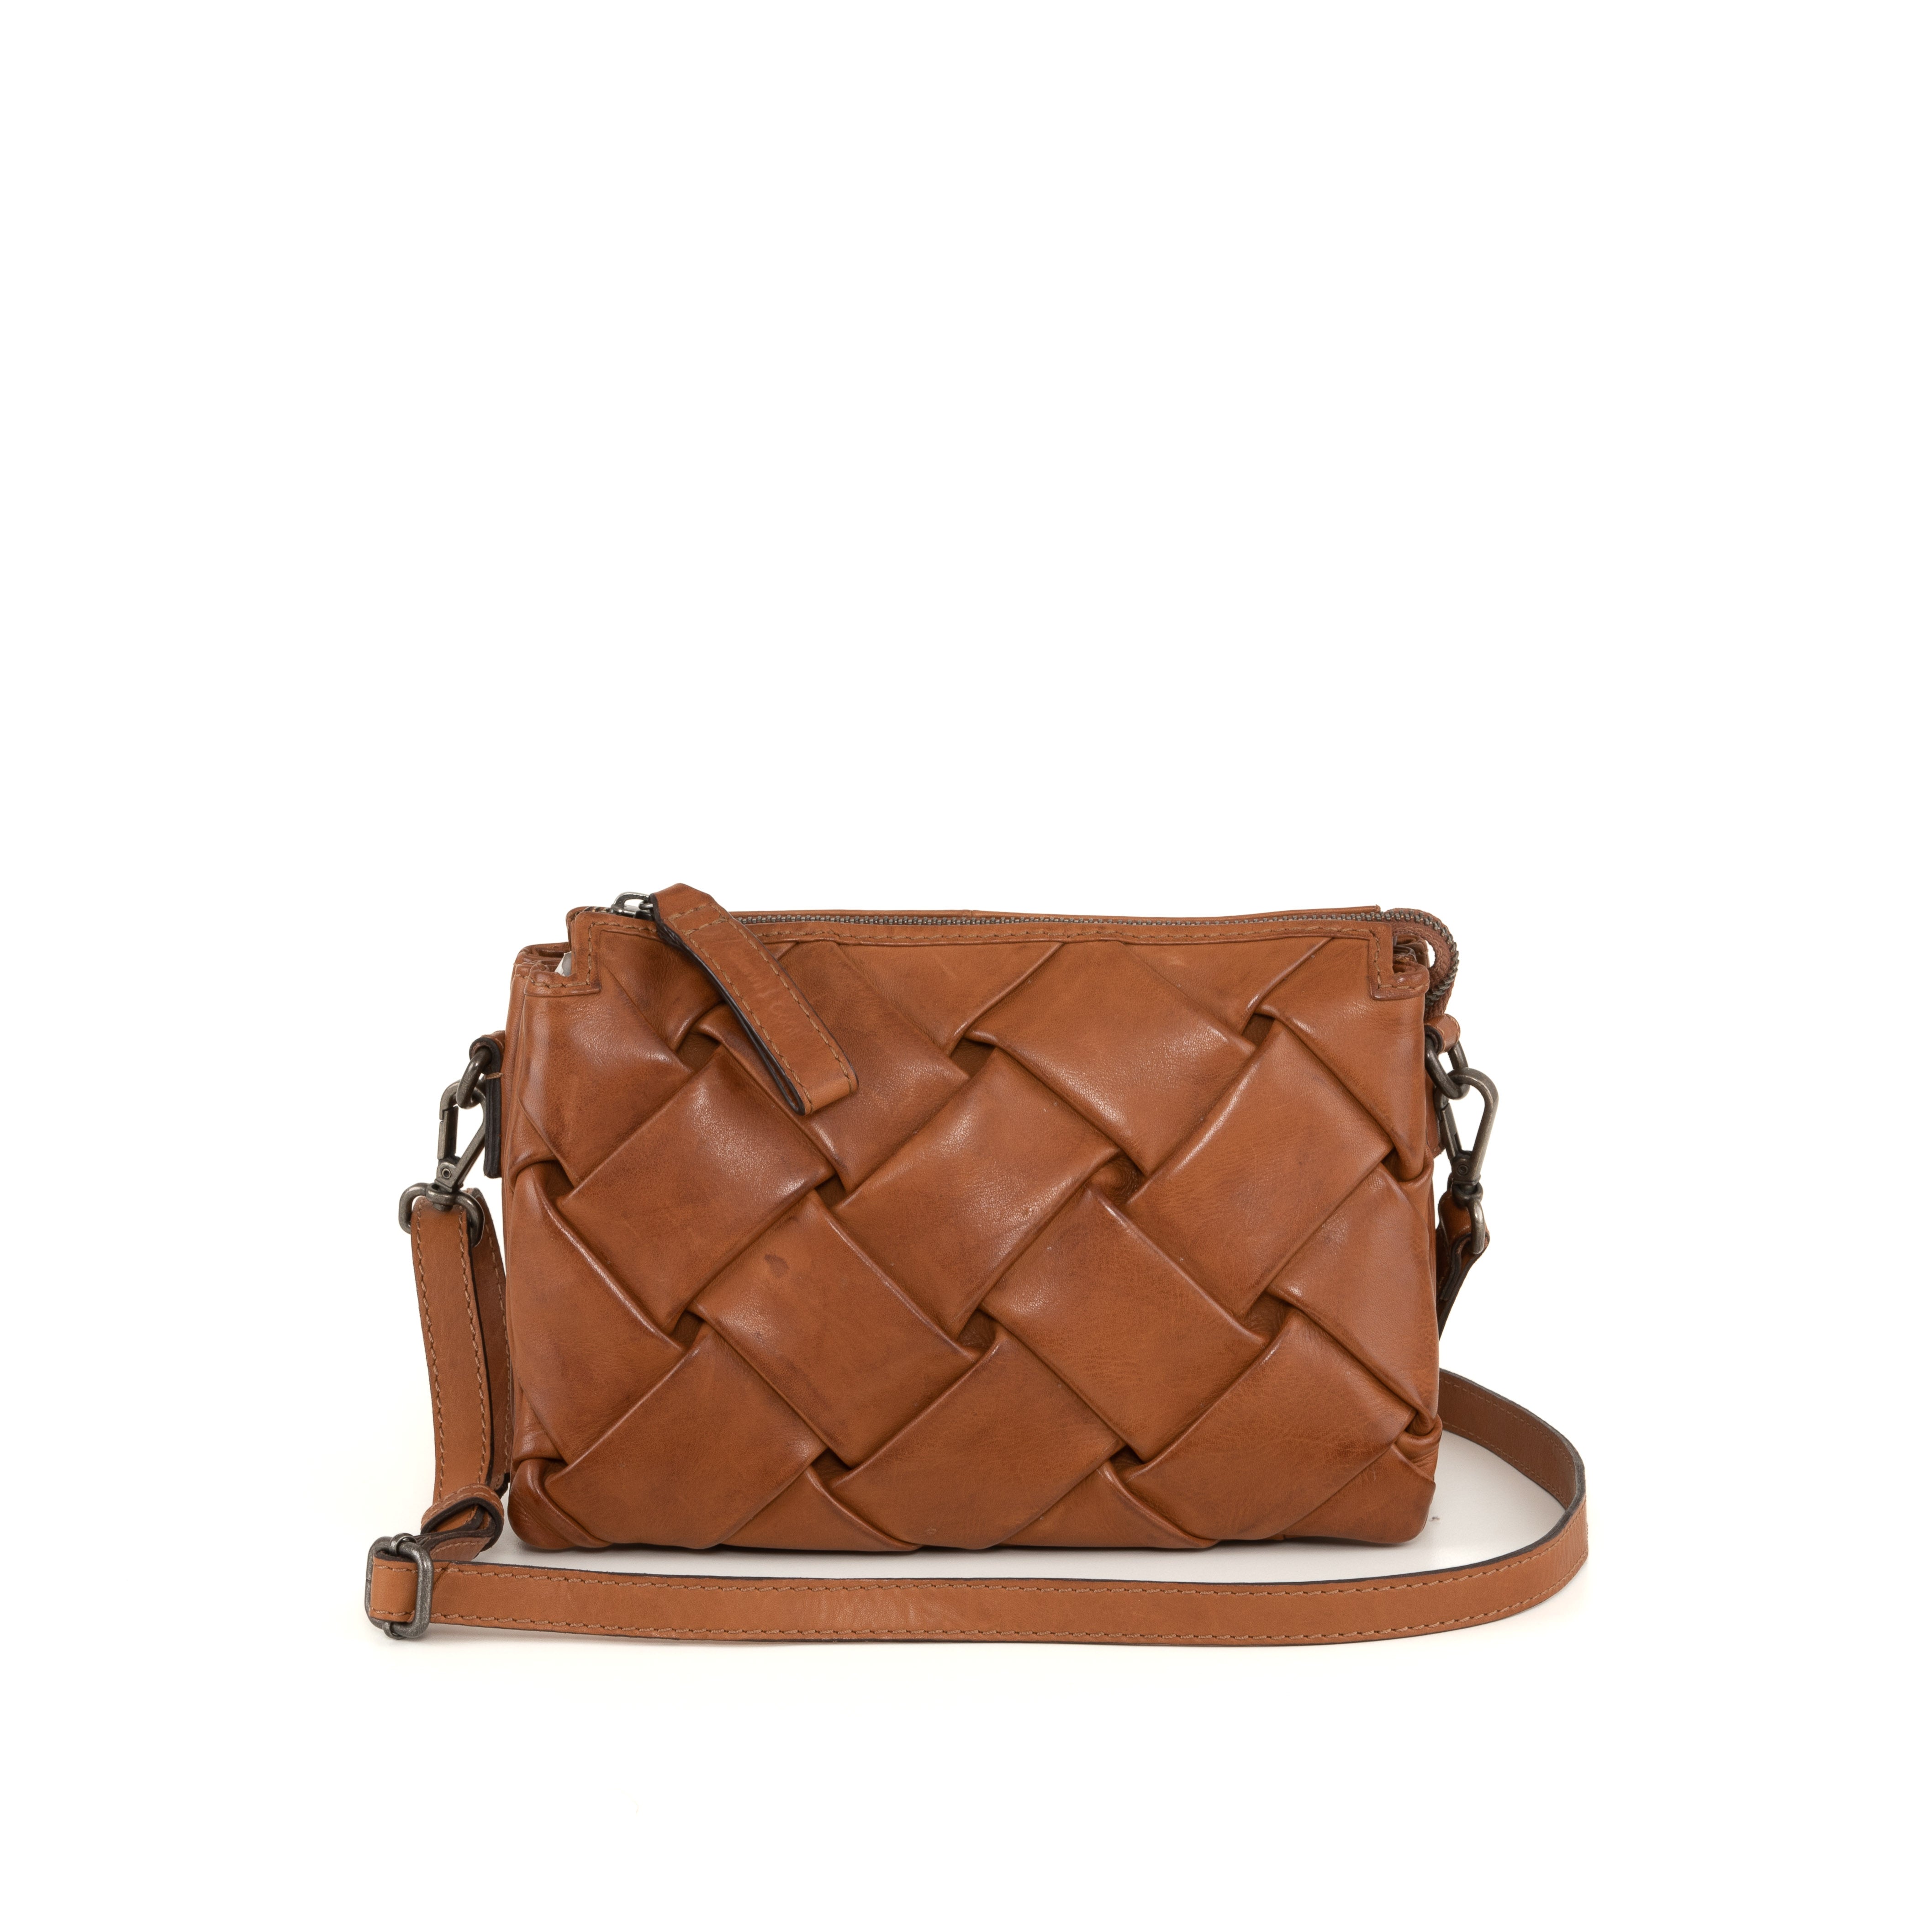 Brown woven leather shoulder bag with adjustable strap